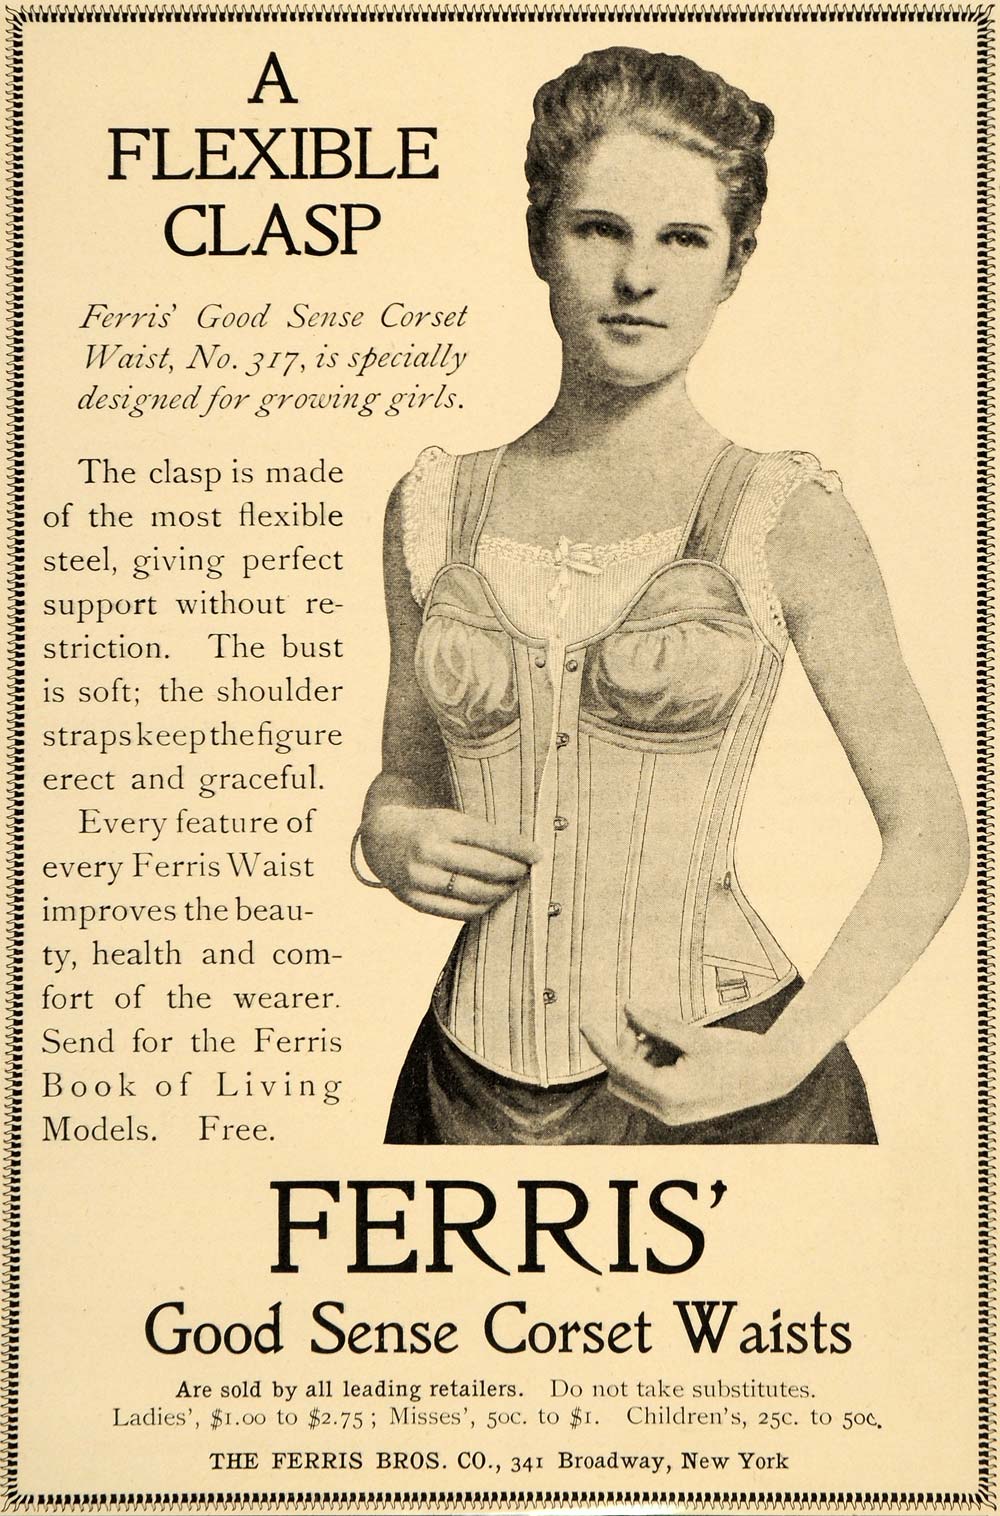 1900 Ad Ferris Corset Waist Clothing Fashion No 317 - ORIGINAL ADVERTISING LHJ4